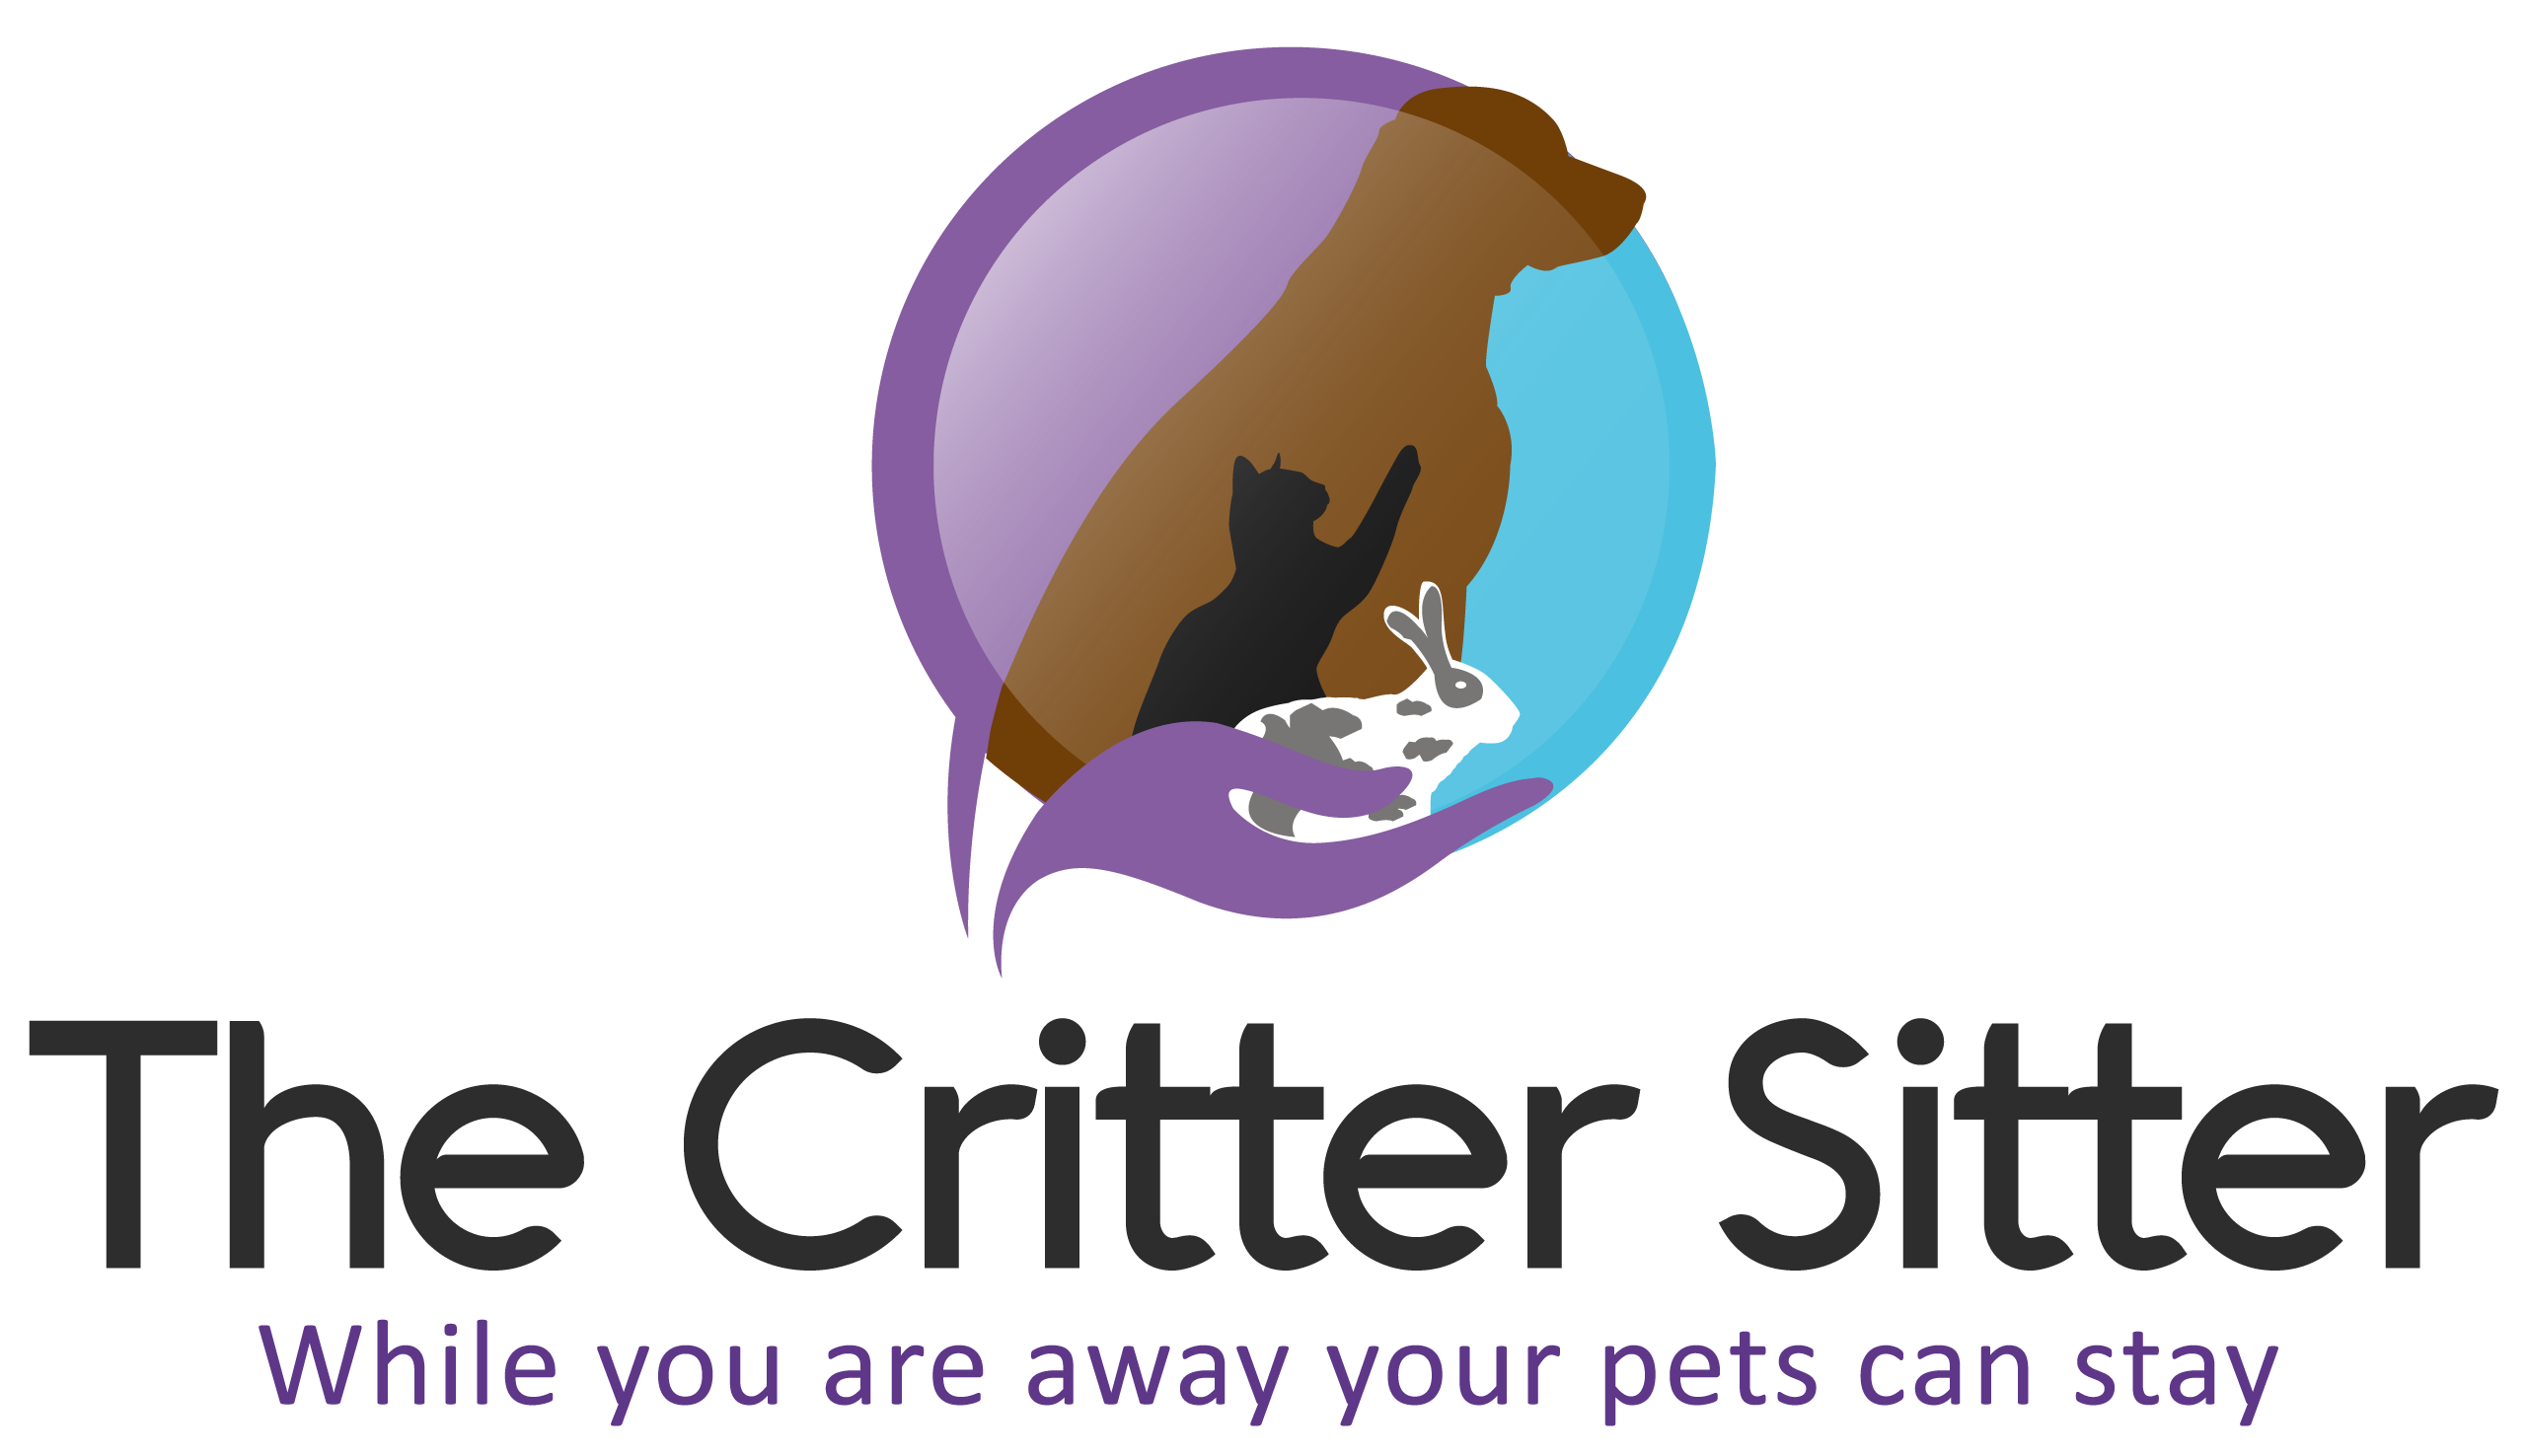 The Critter Sitter